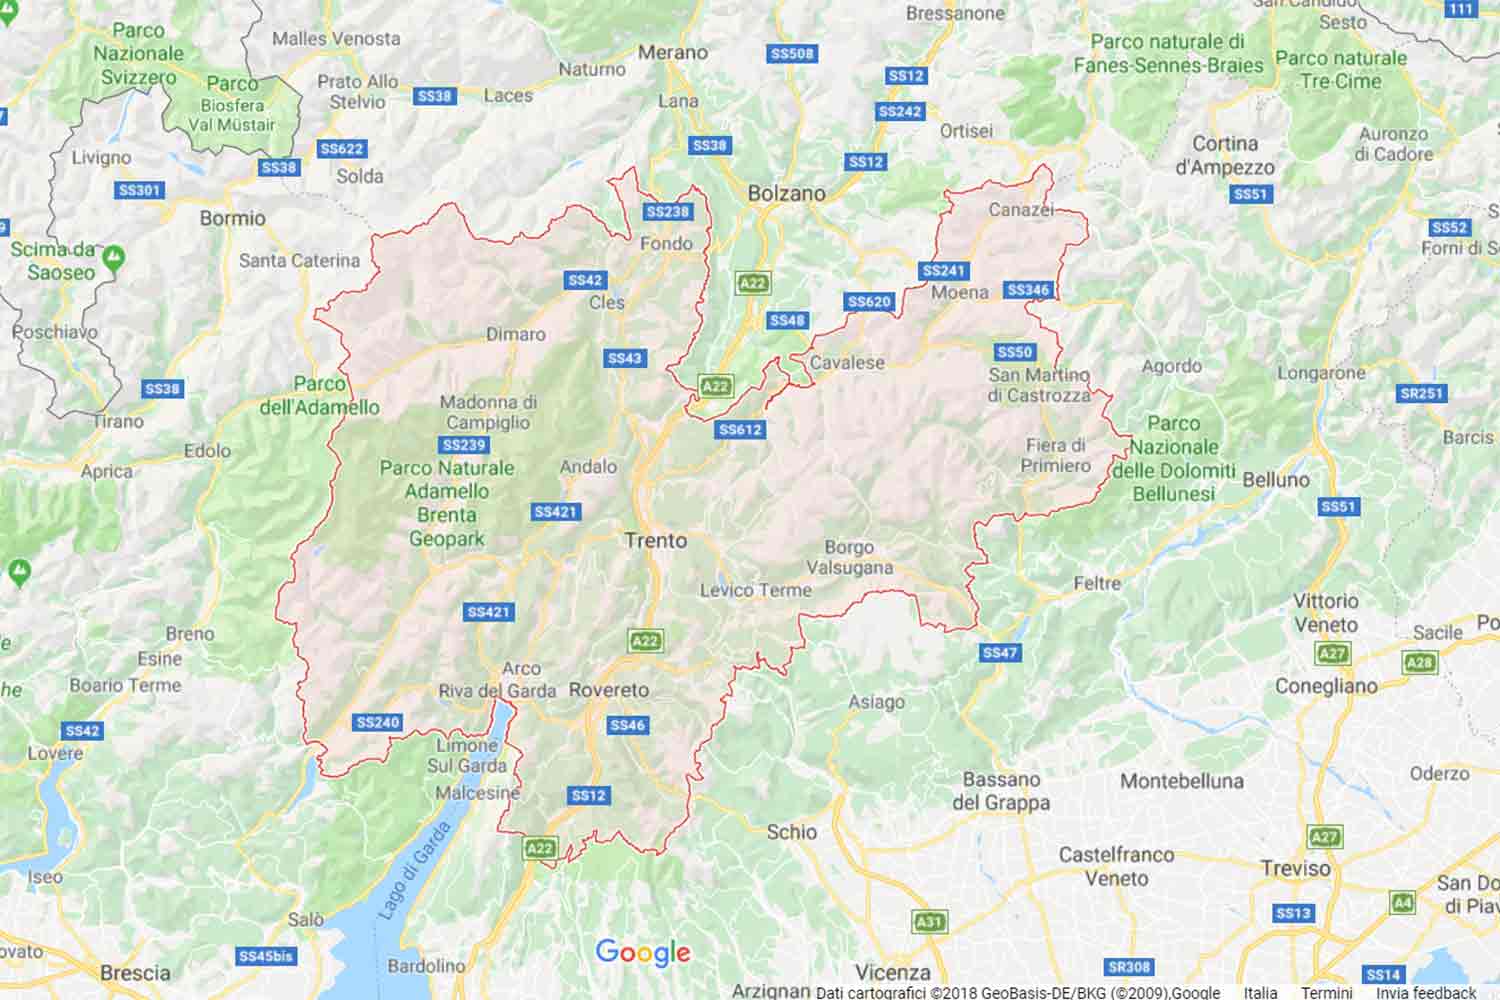 Trentino - Trento - Valfloriana Preventivi Veloci google maps